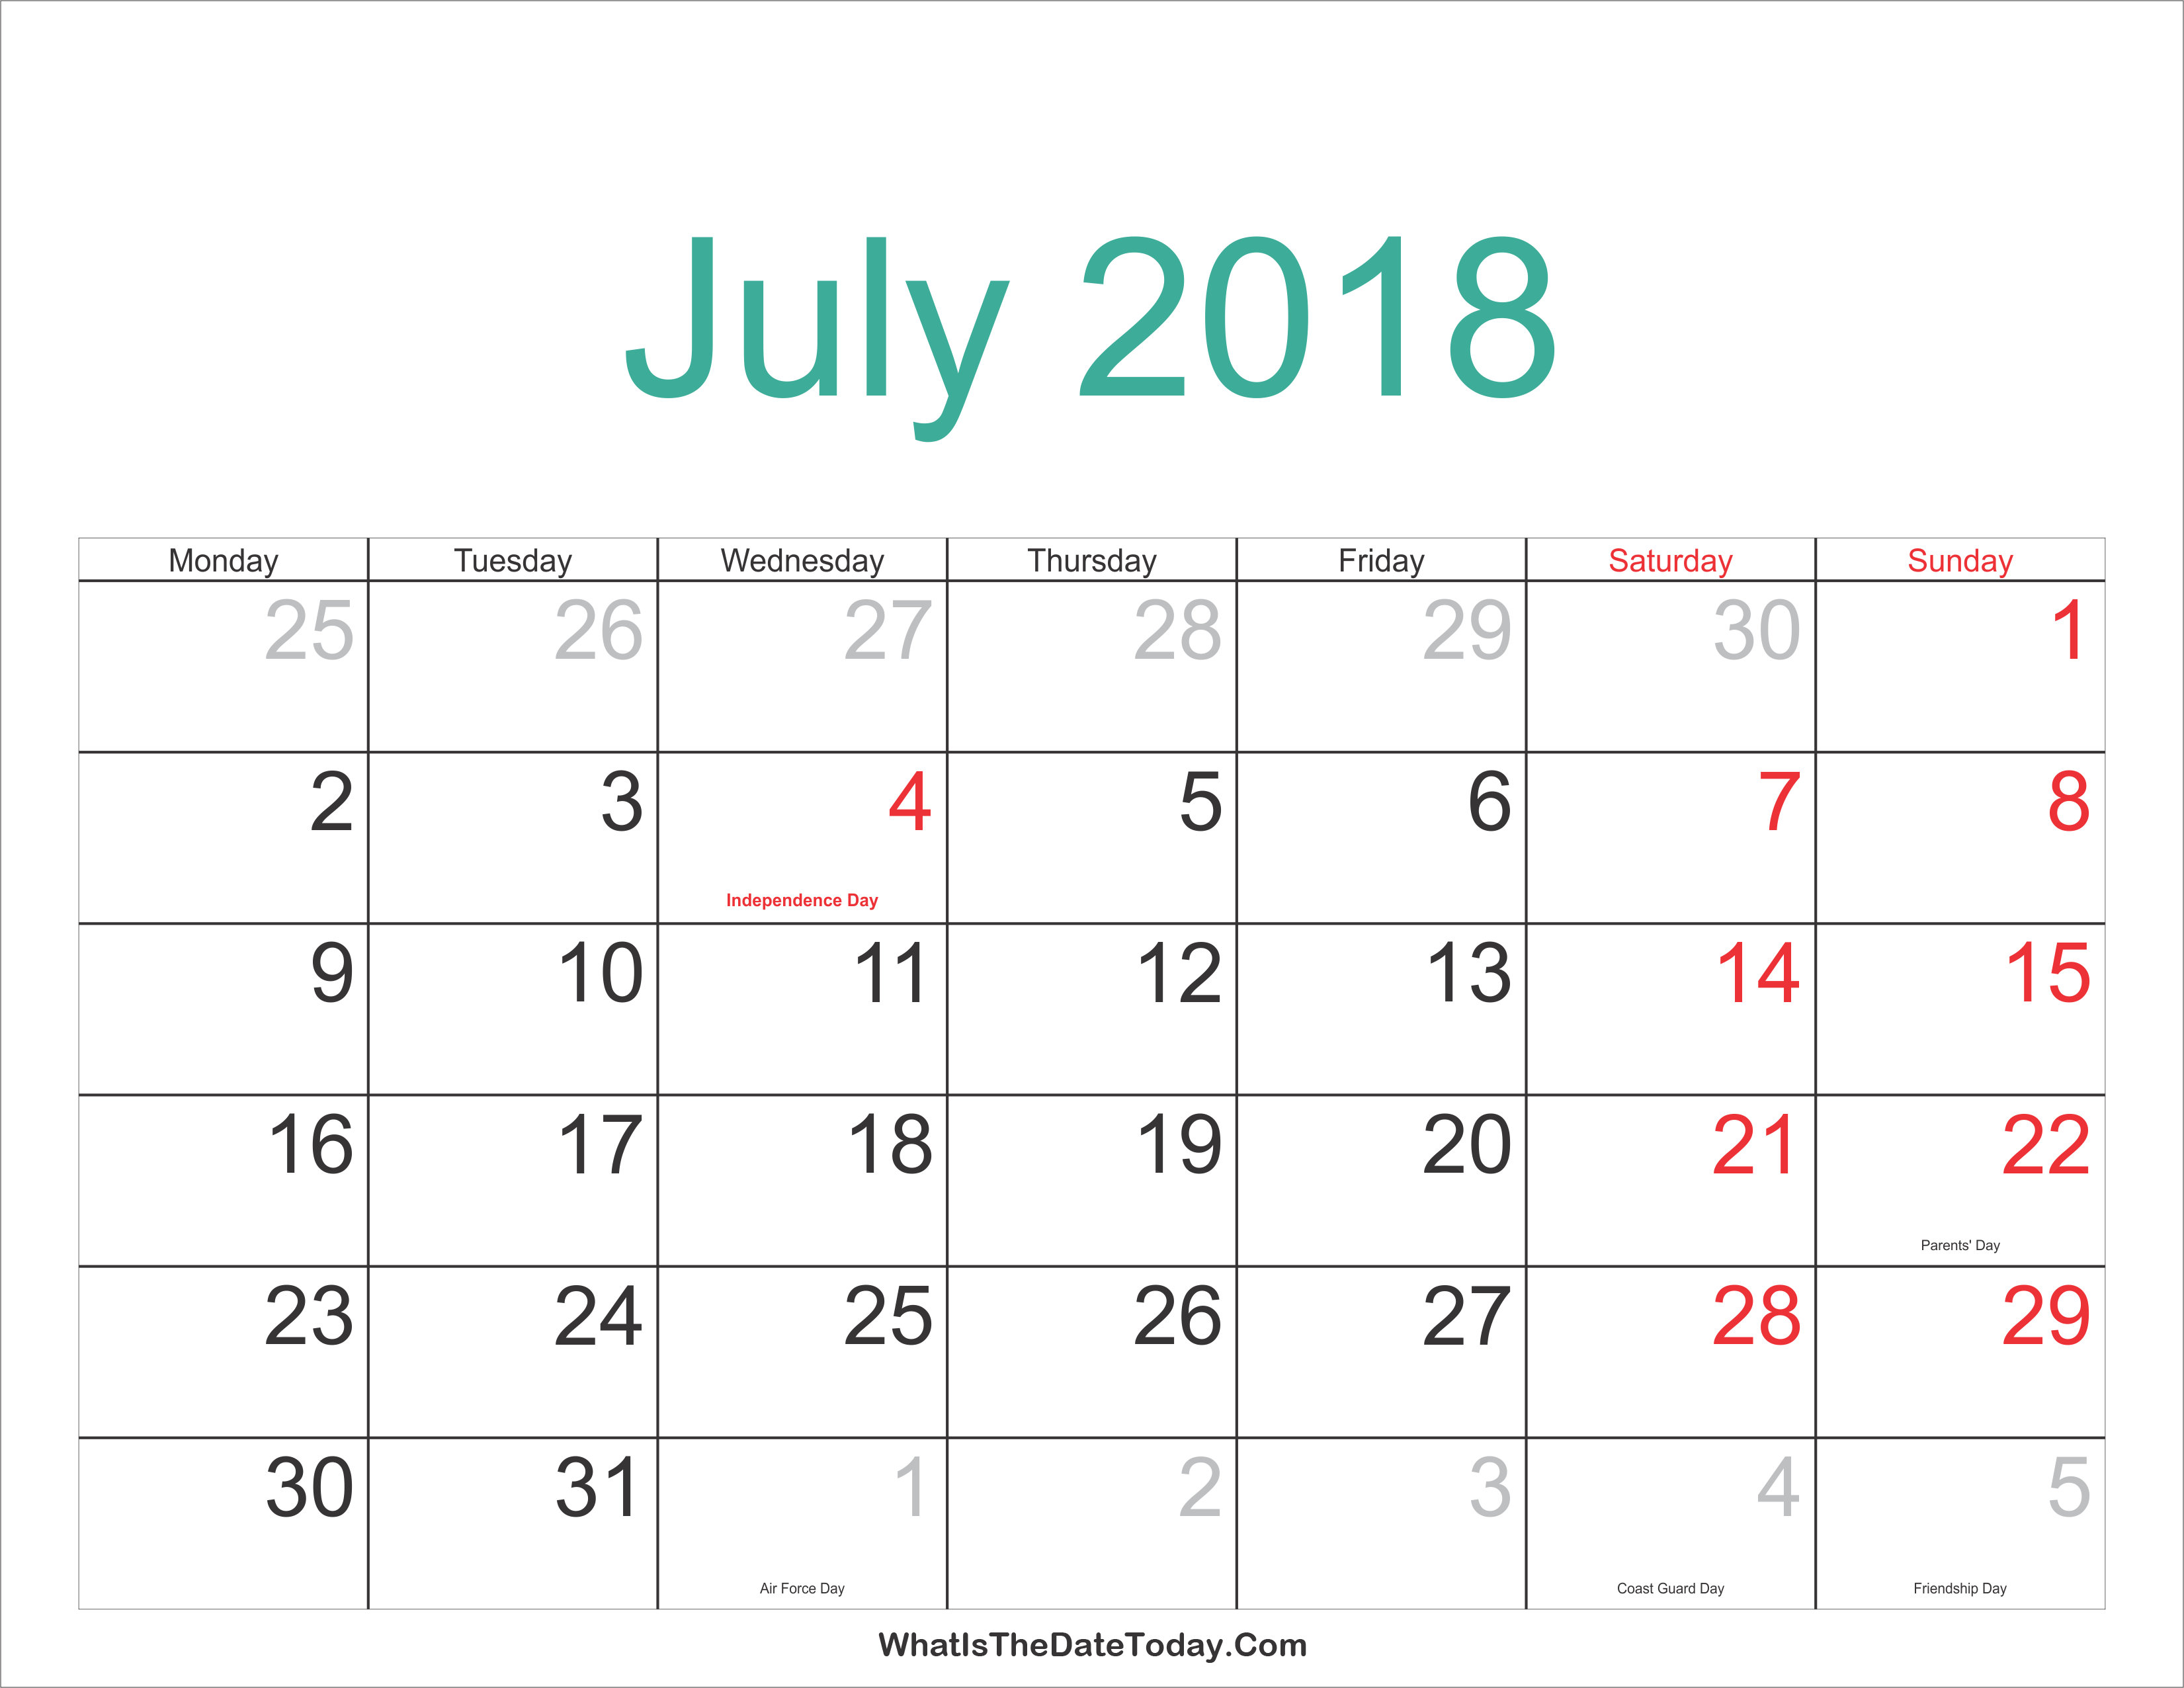 july-2018-calendar-2a-apex